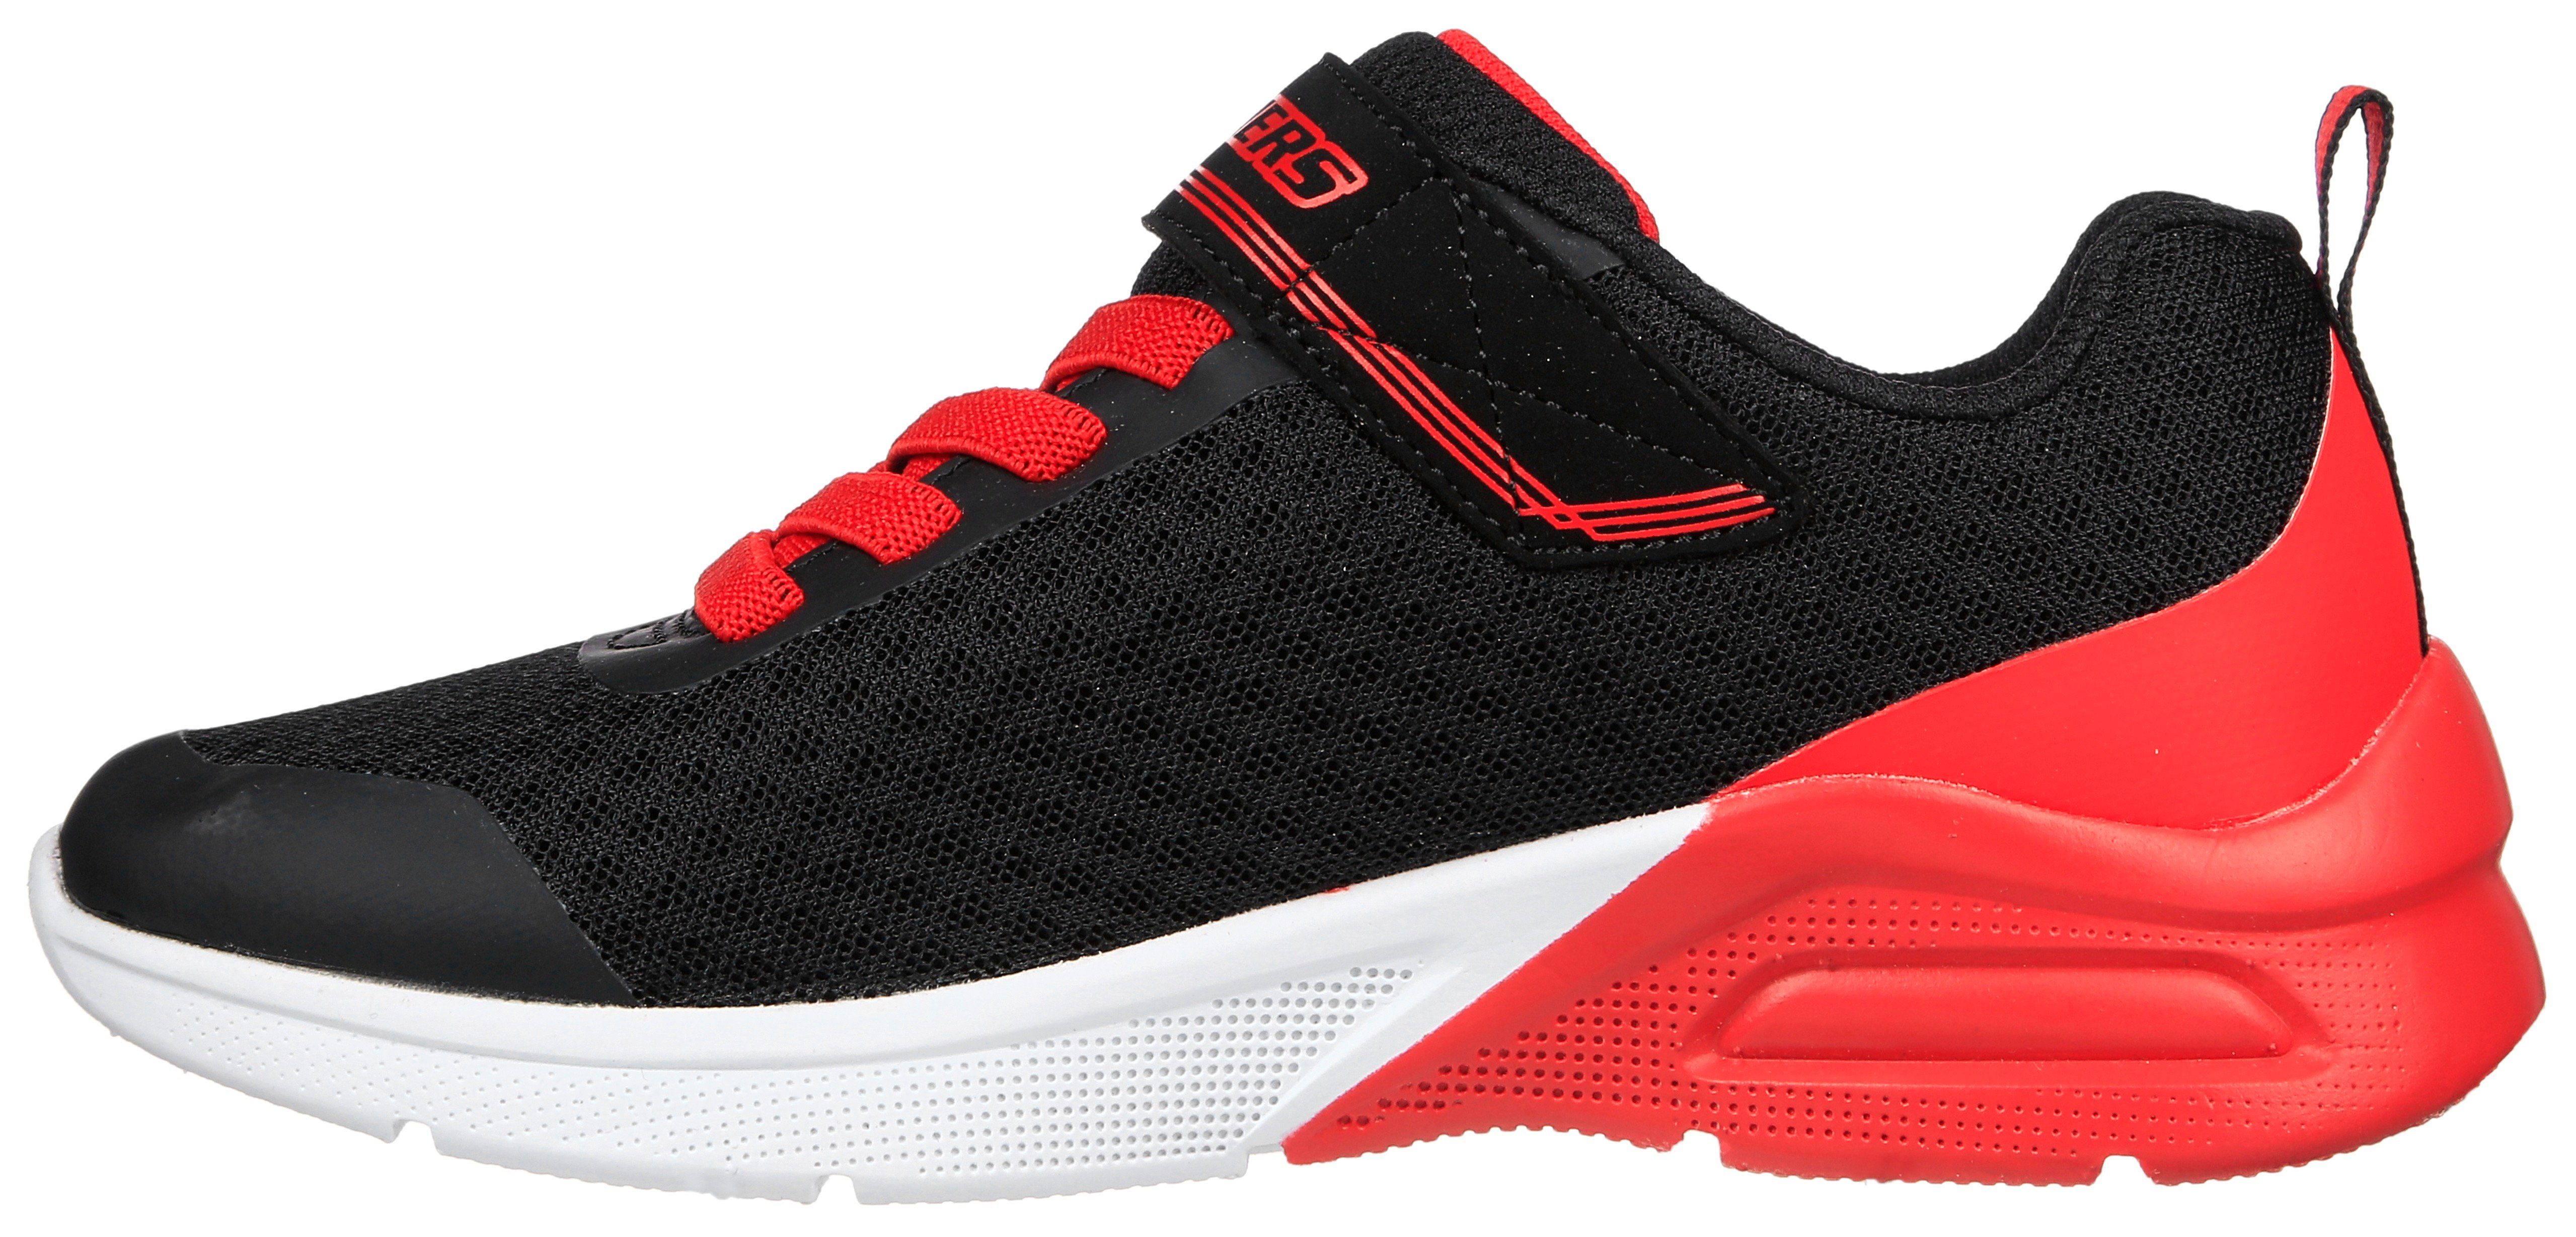 Farbkombination in MAX, schwarz-rot modischer MICROSPEC Skechers Kids Sneaker